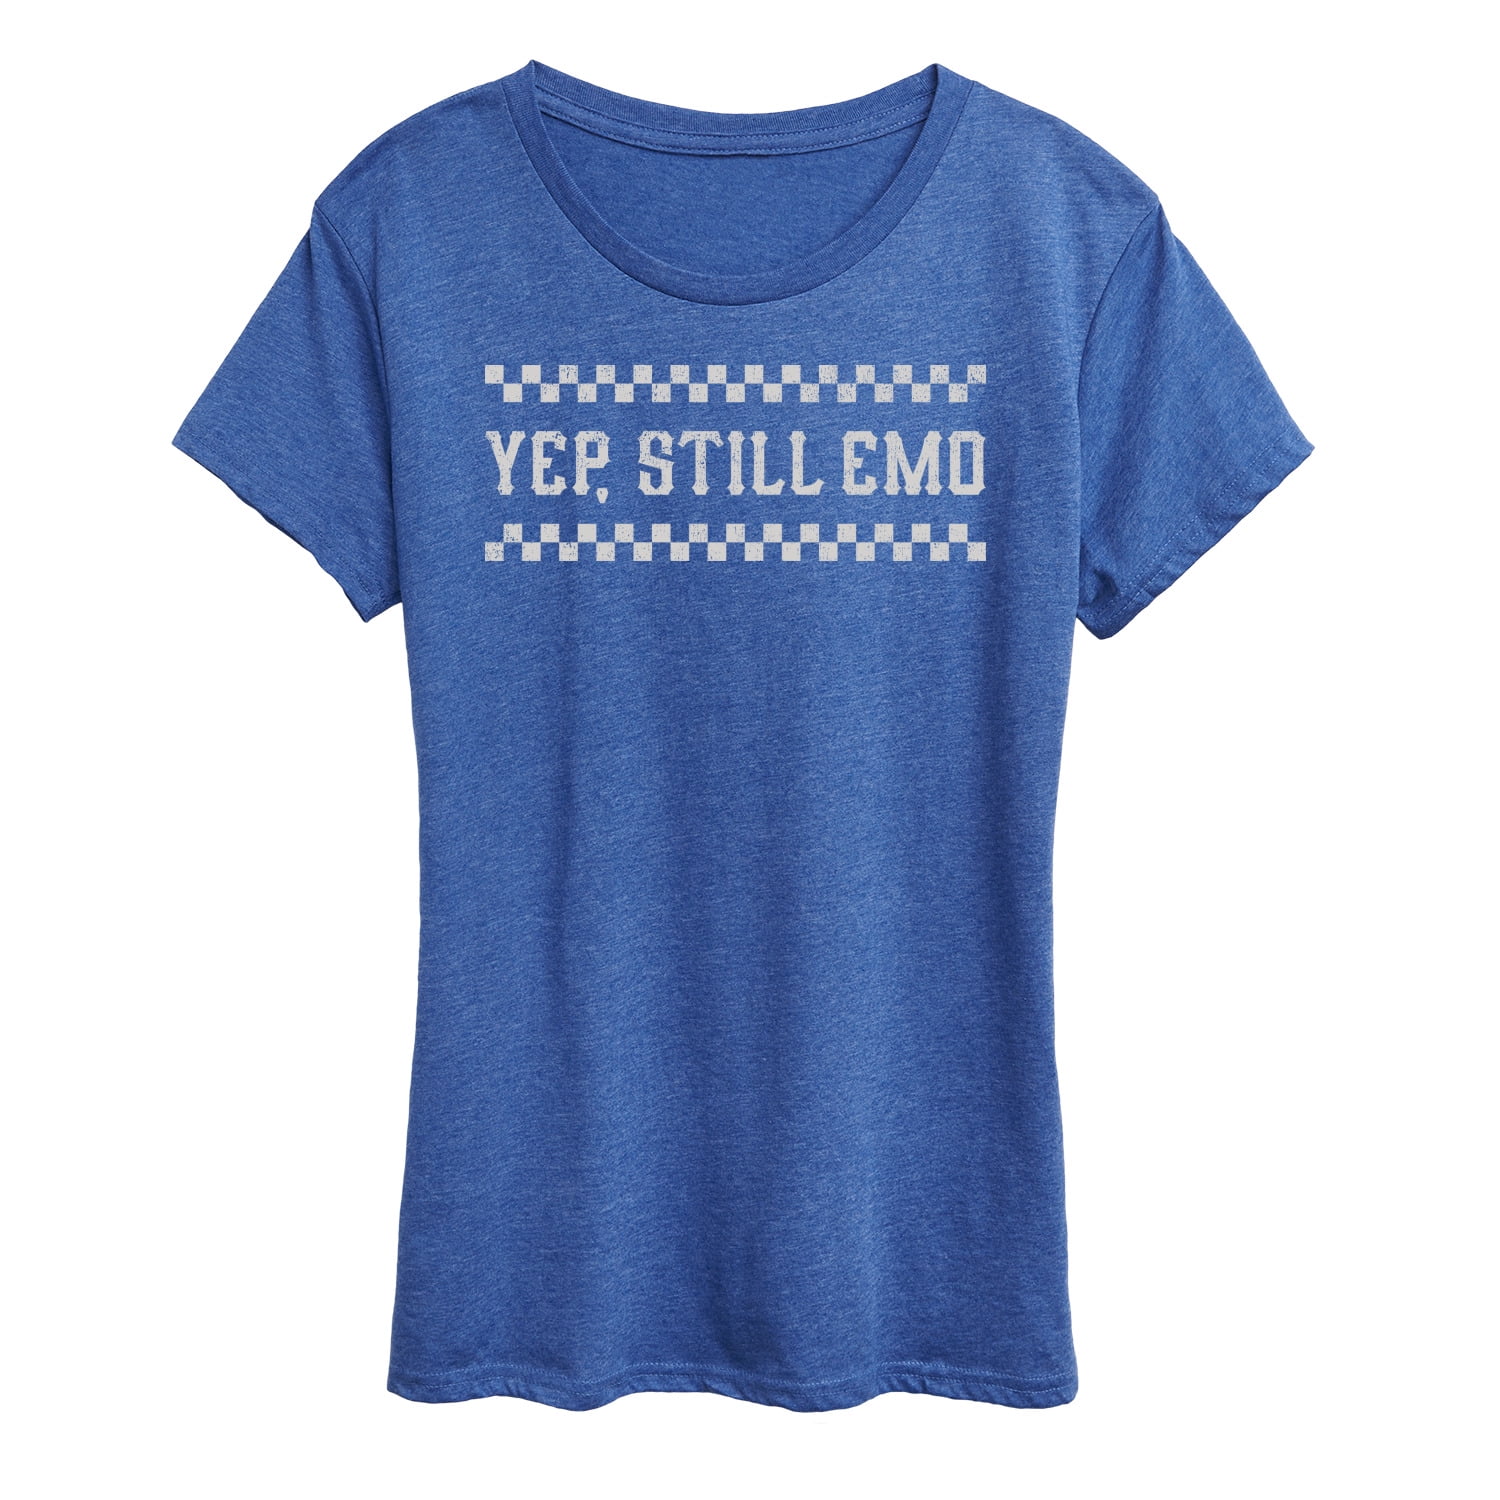 Instant Message - Yep Still Emo - Women's Short Sleeve Graphic T-Shirt ...